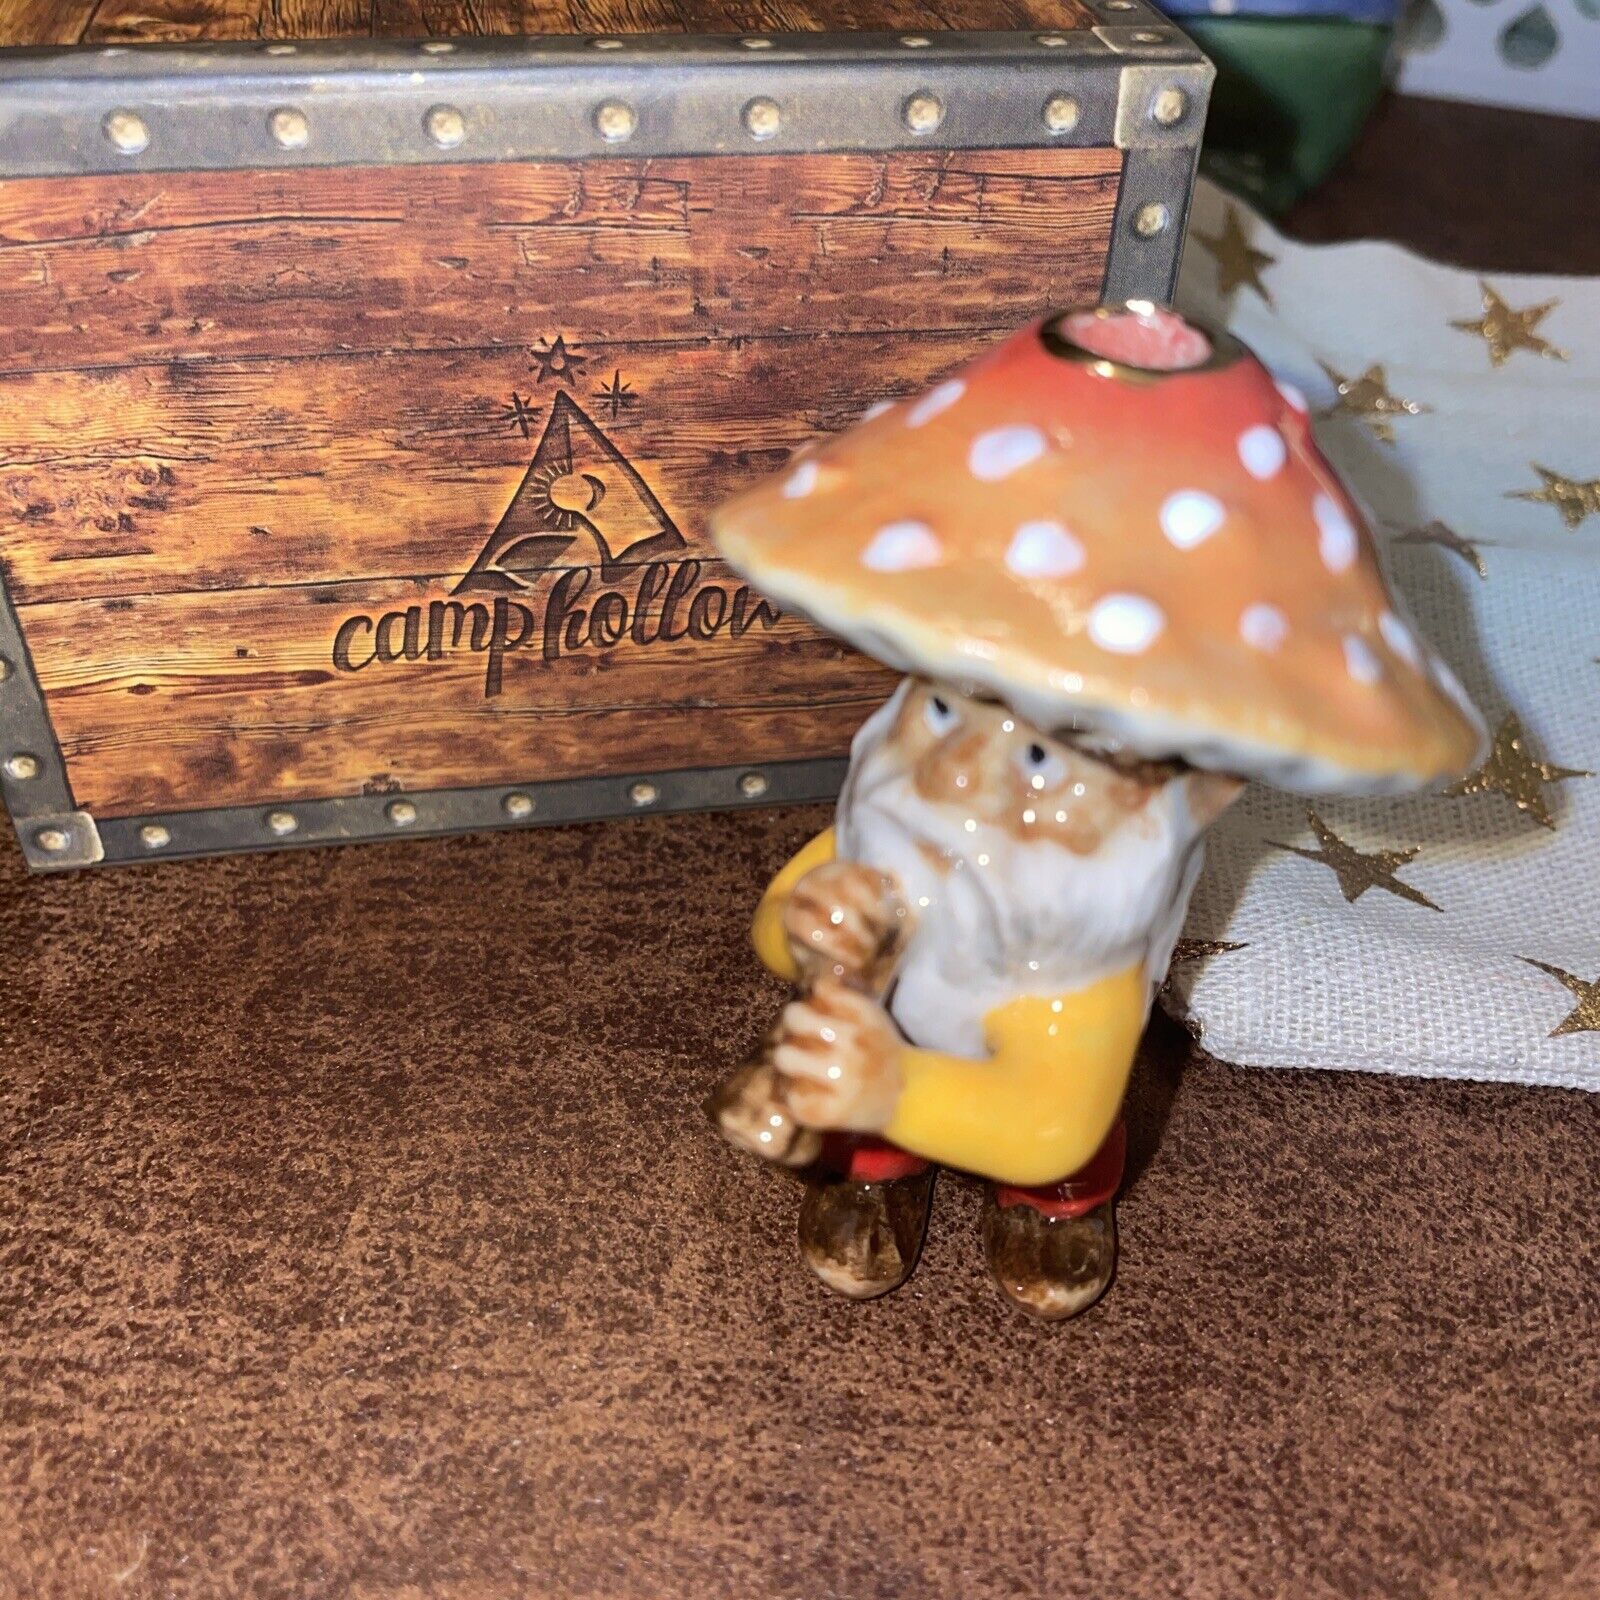 Camp Hollow Orange Mushroom Gnome Candle Holder Cake Topper - RARE